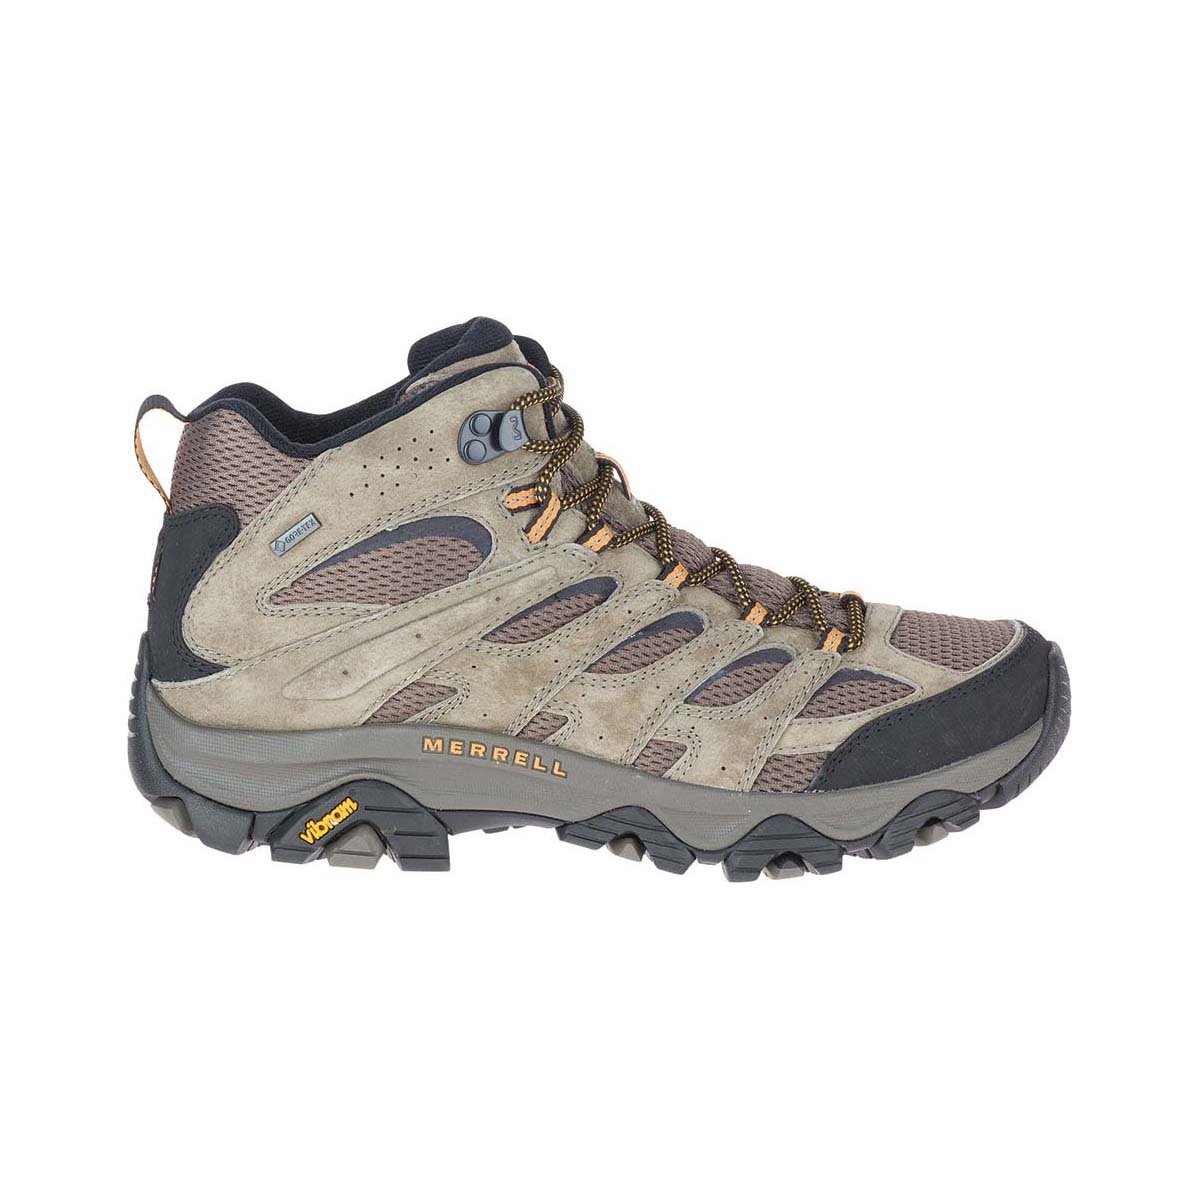 Merrell Men's Moab Mid GTX Hiking Boots 10